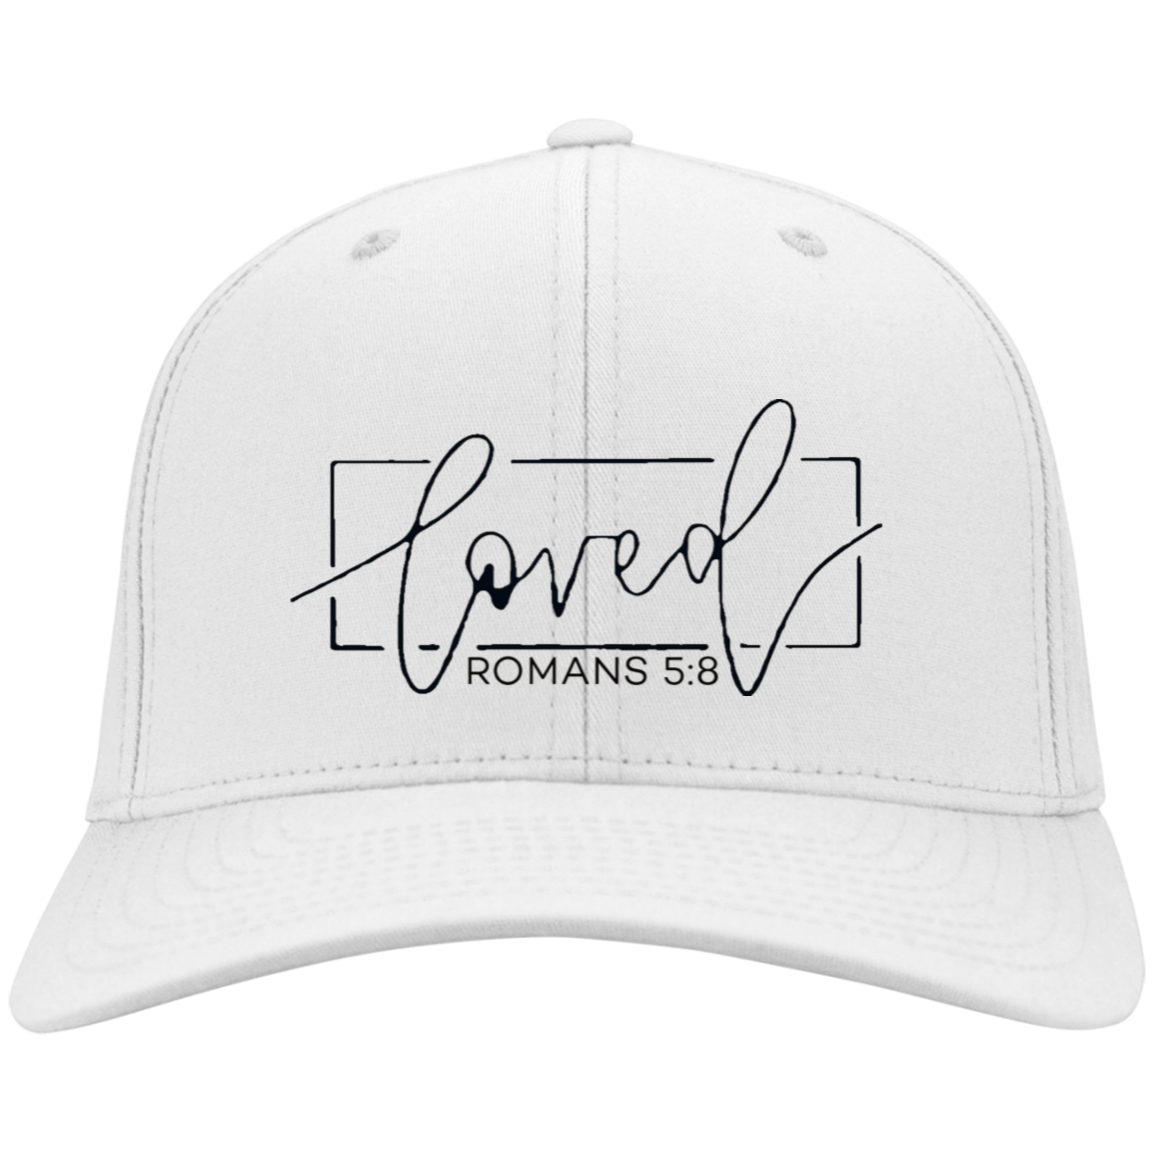 Loved Romans 5:8 Hat